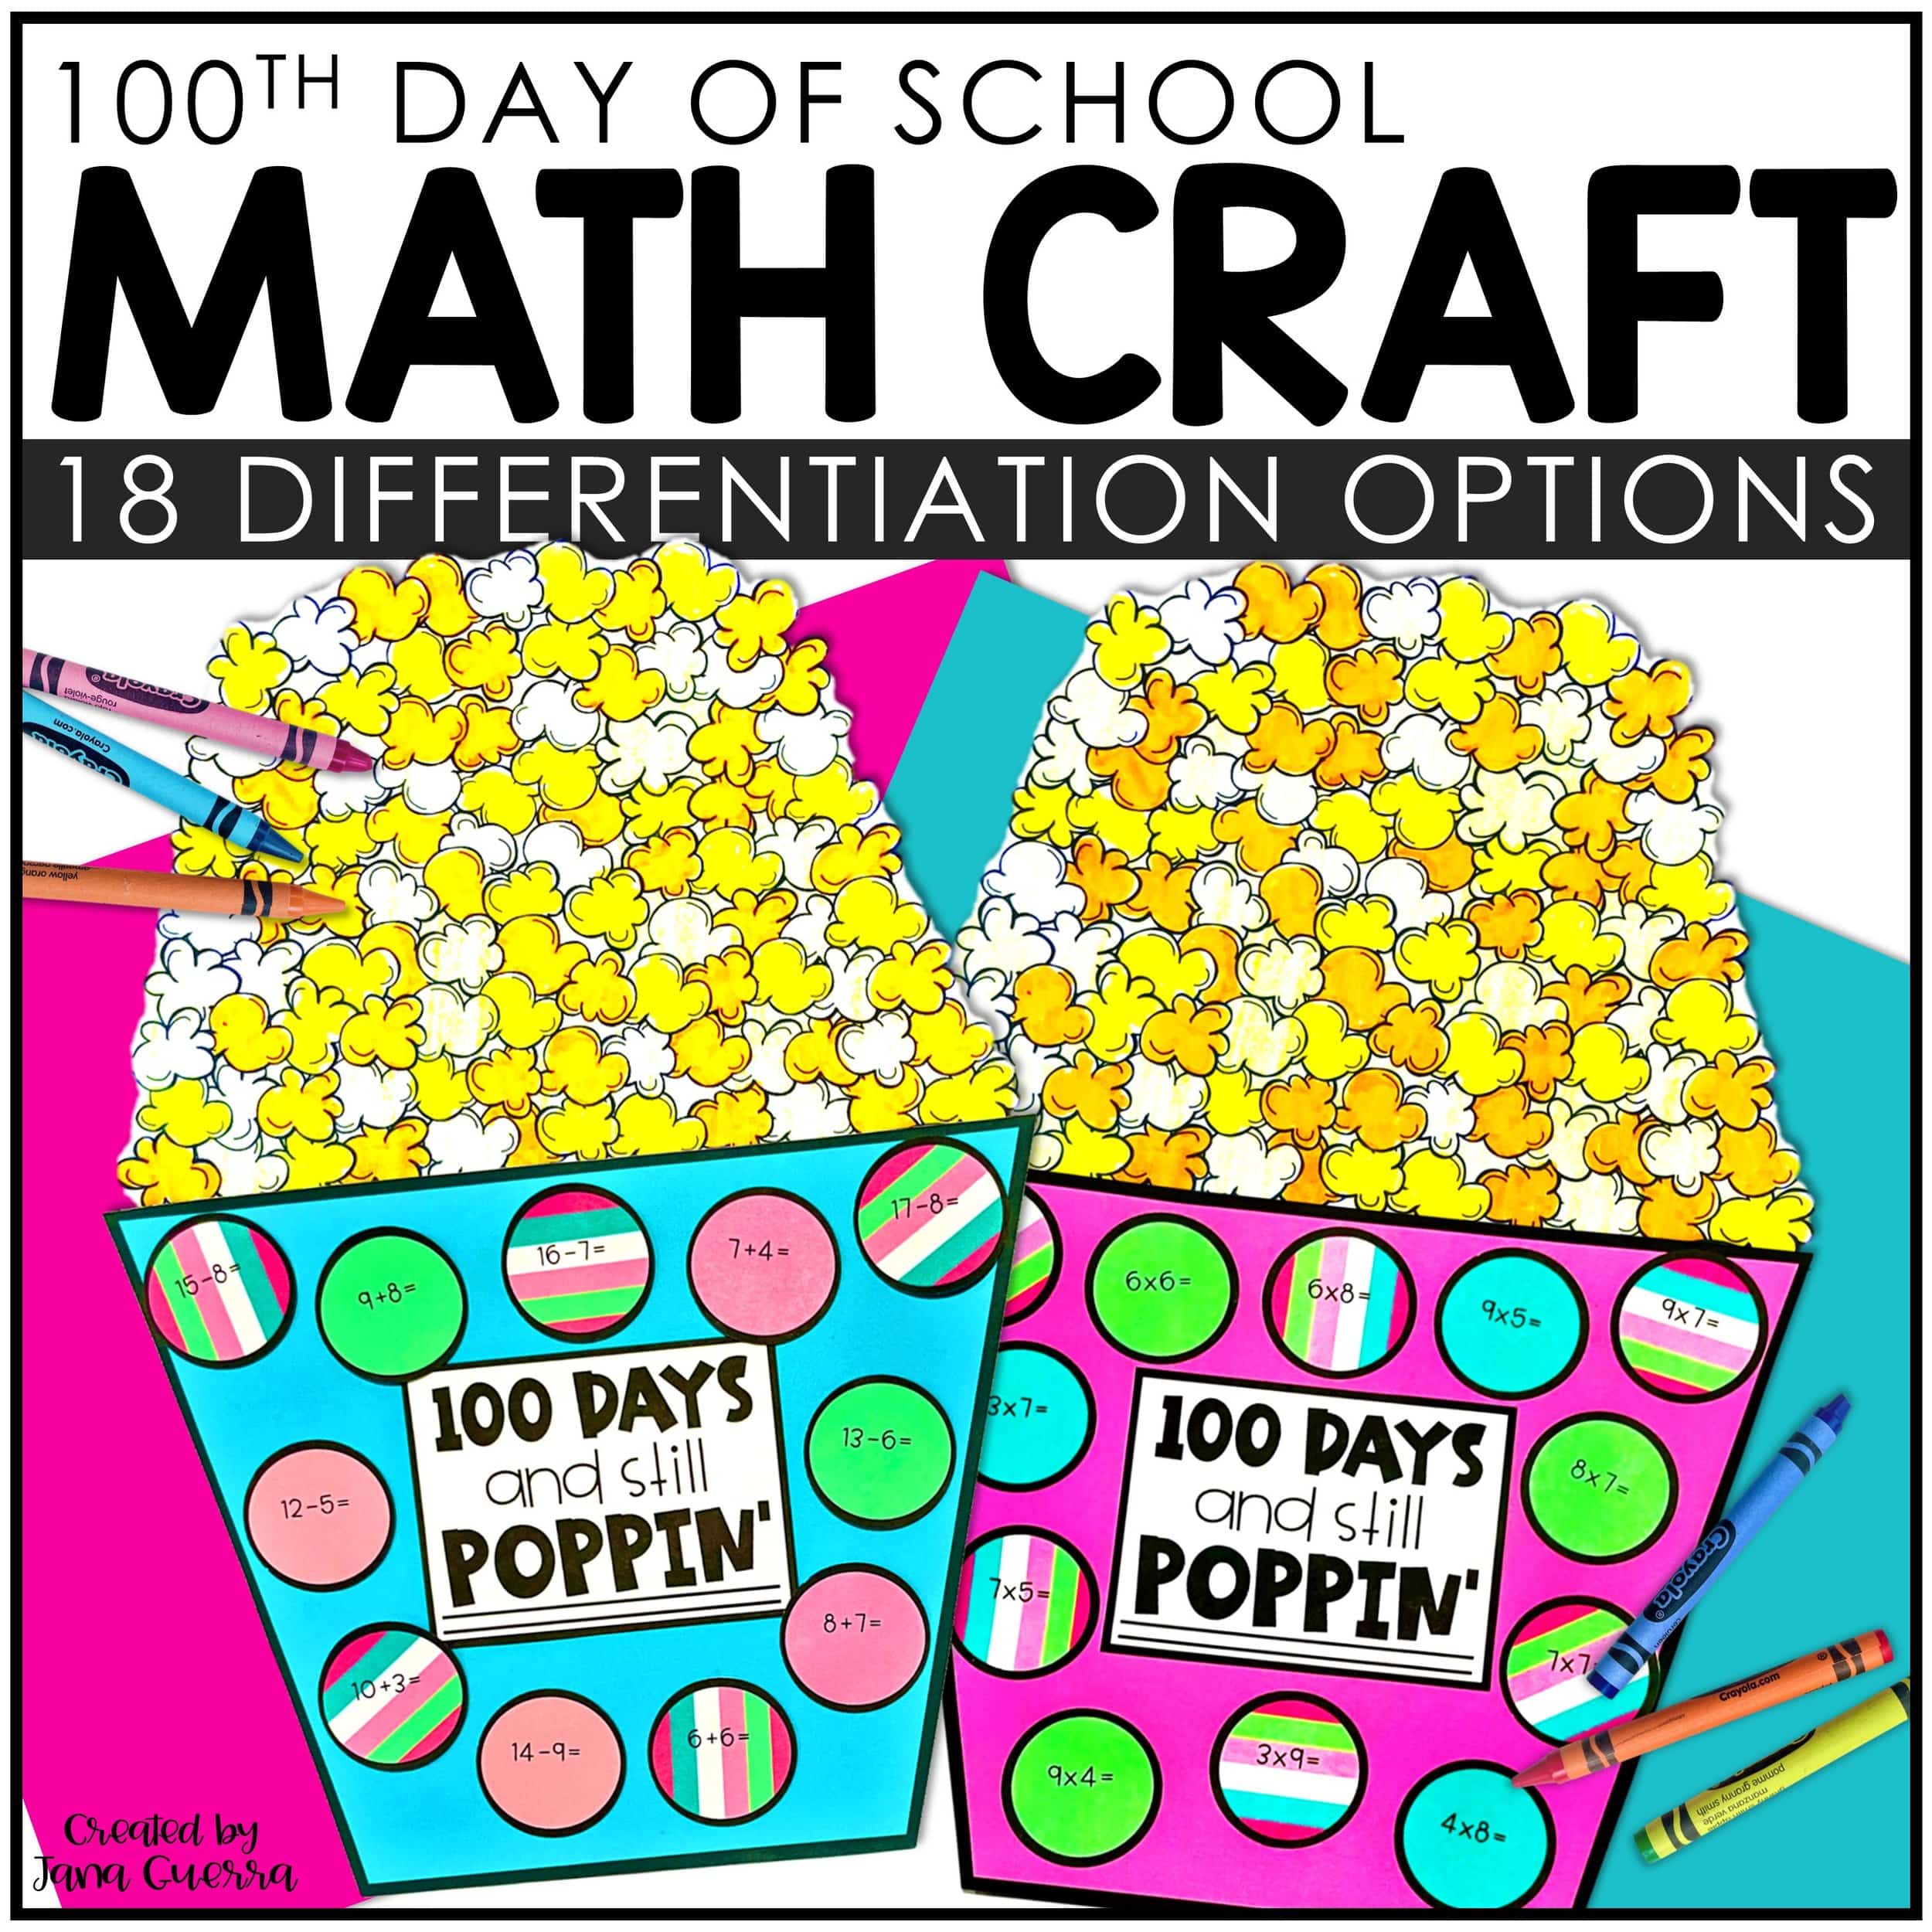 100th Day of School Math Craft